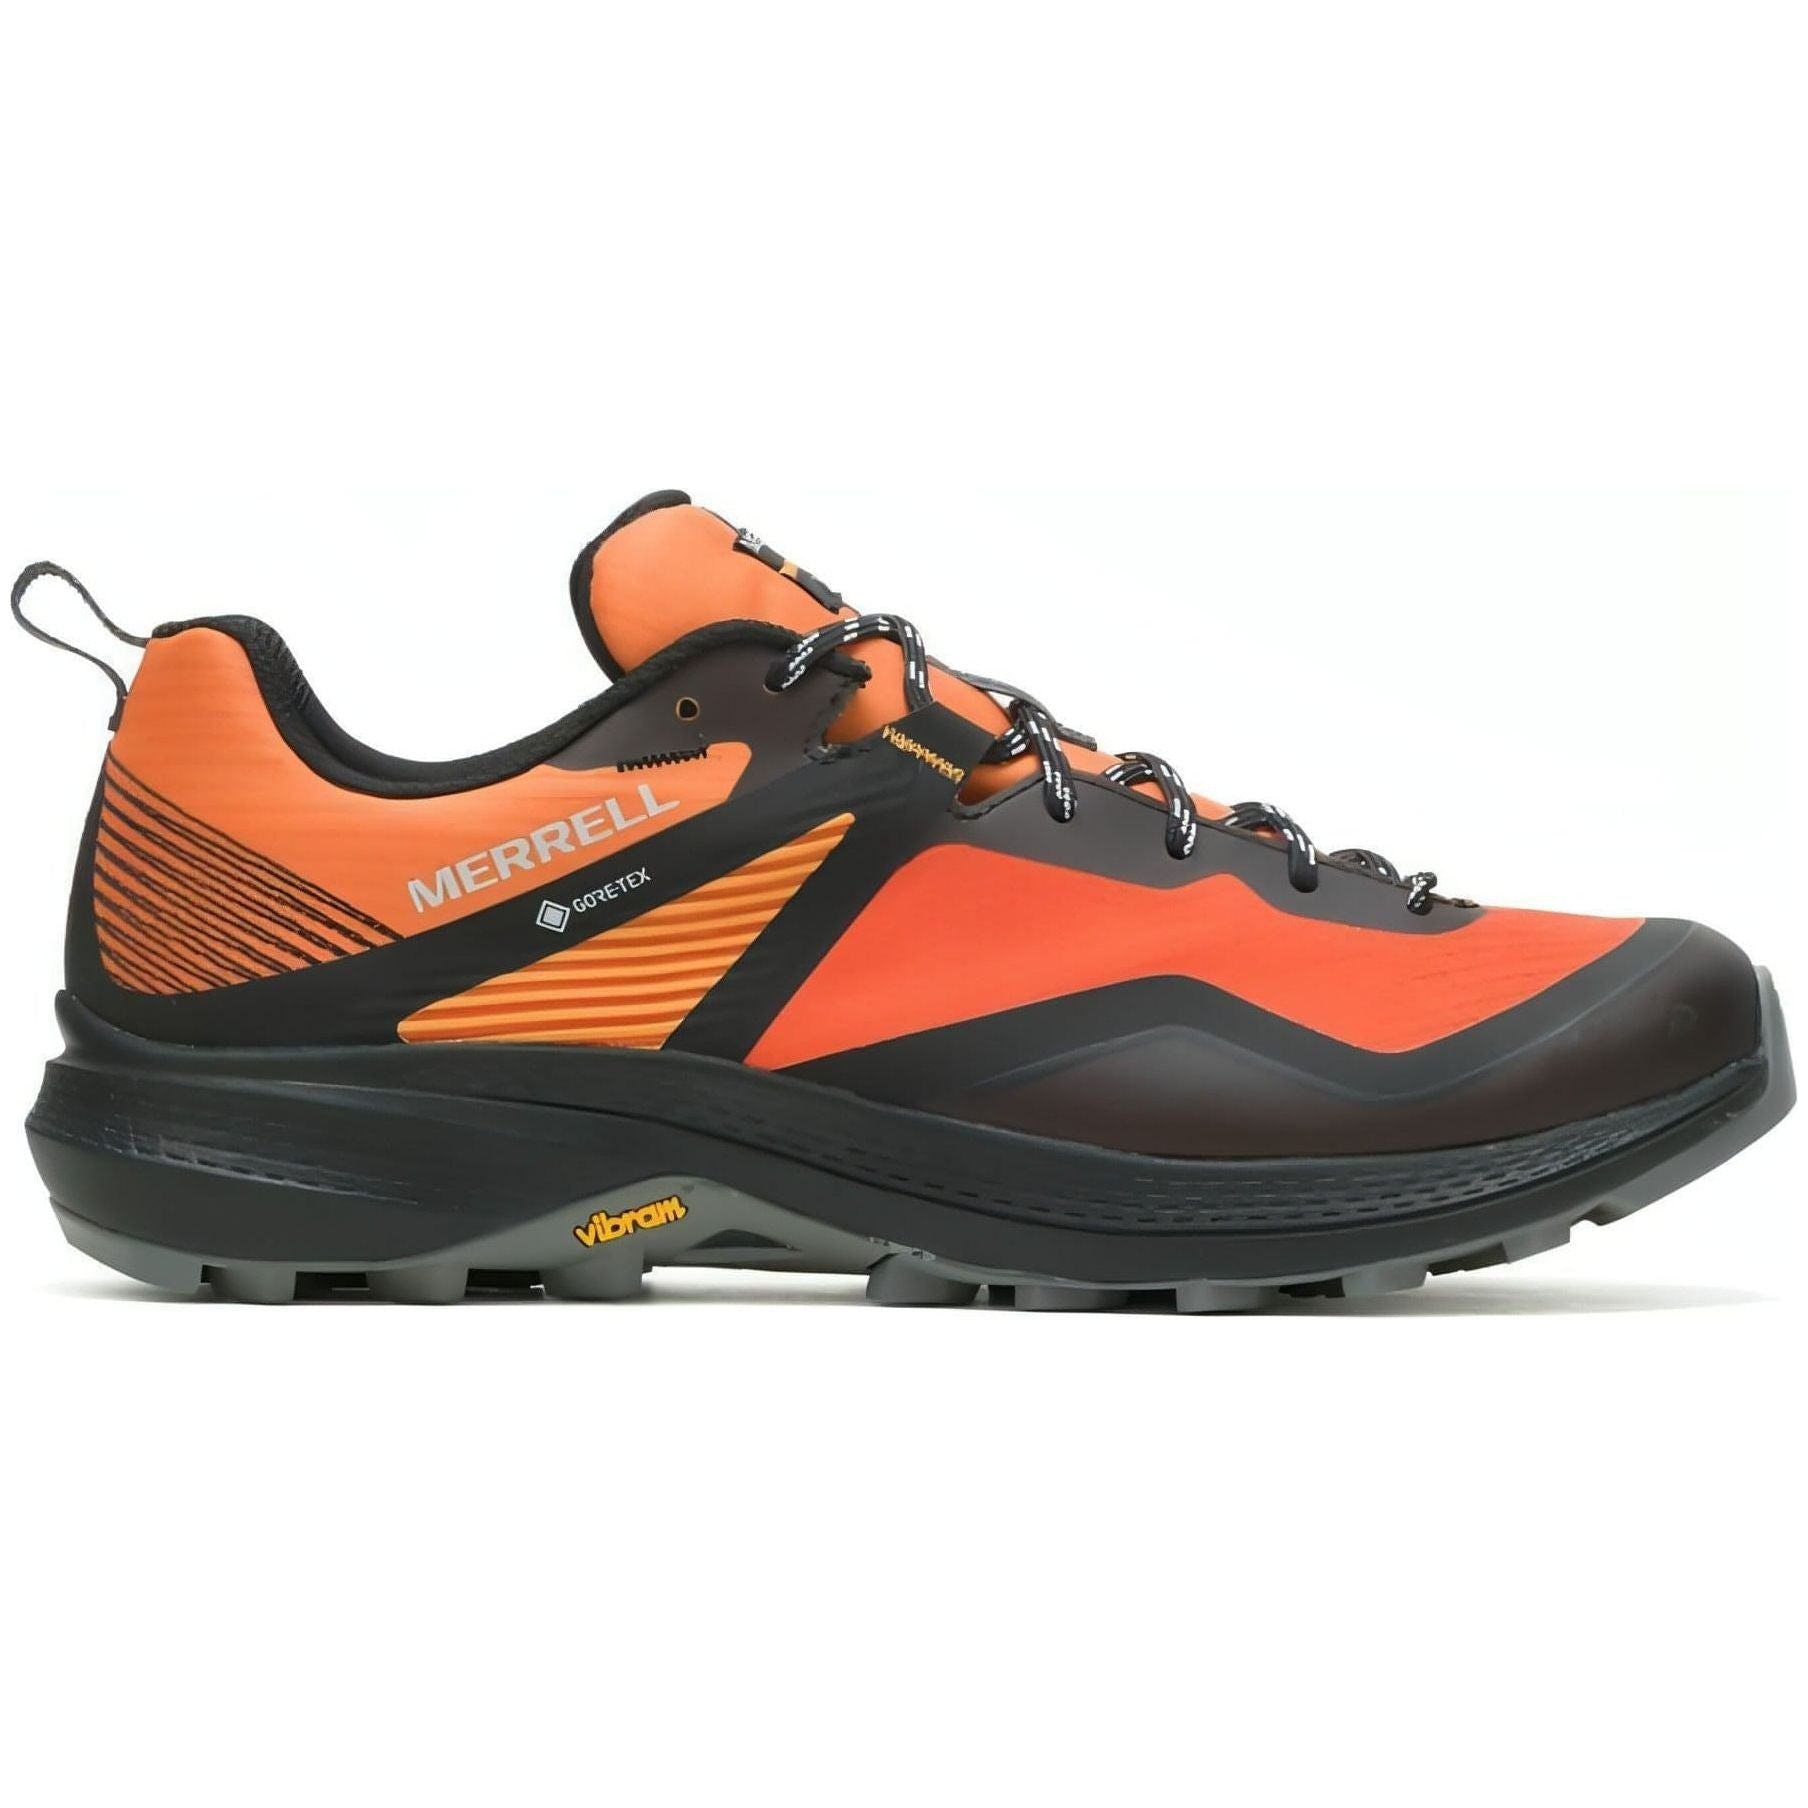 Merrell MQM 3 GTX Mens Walking Shoes - Orange